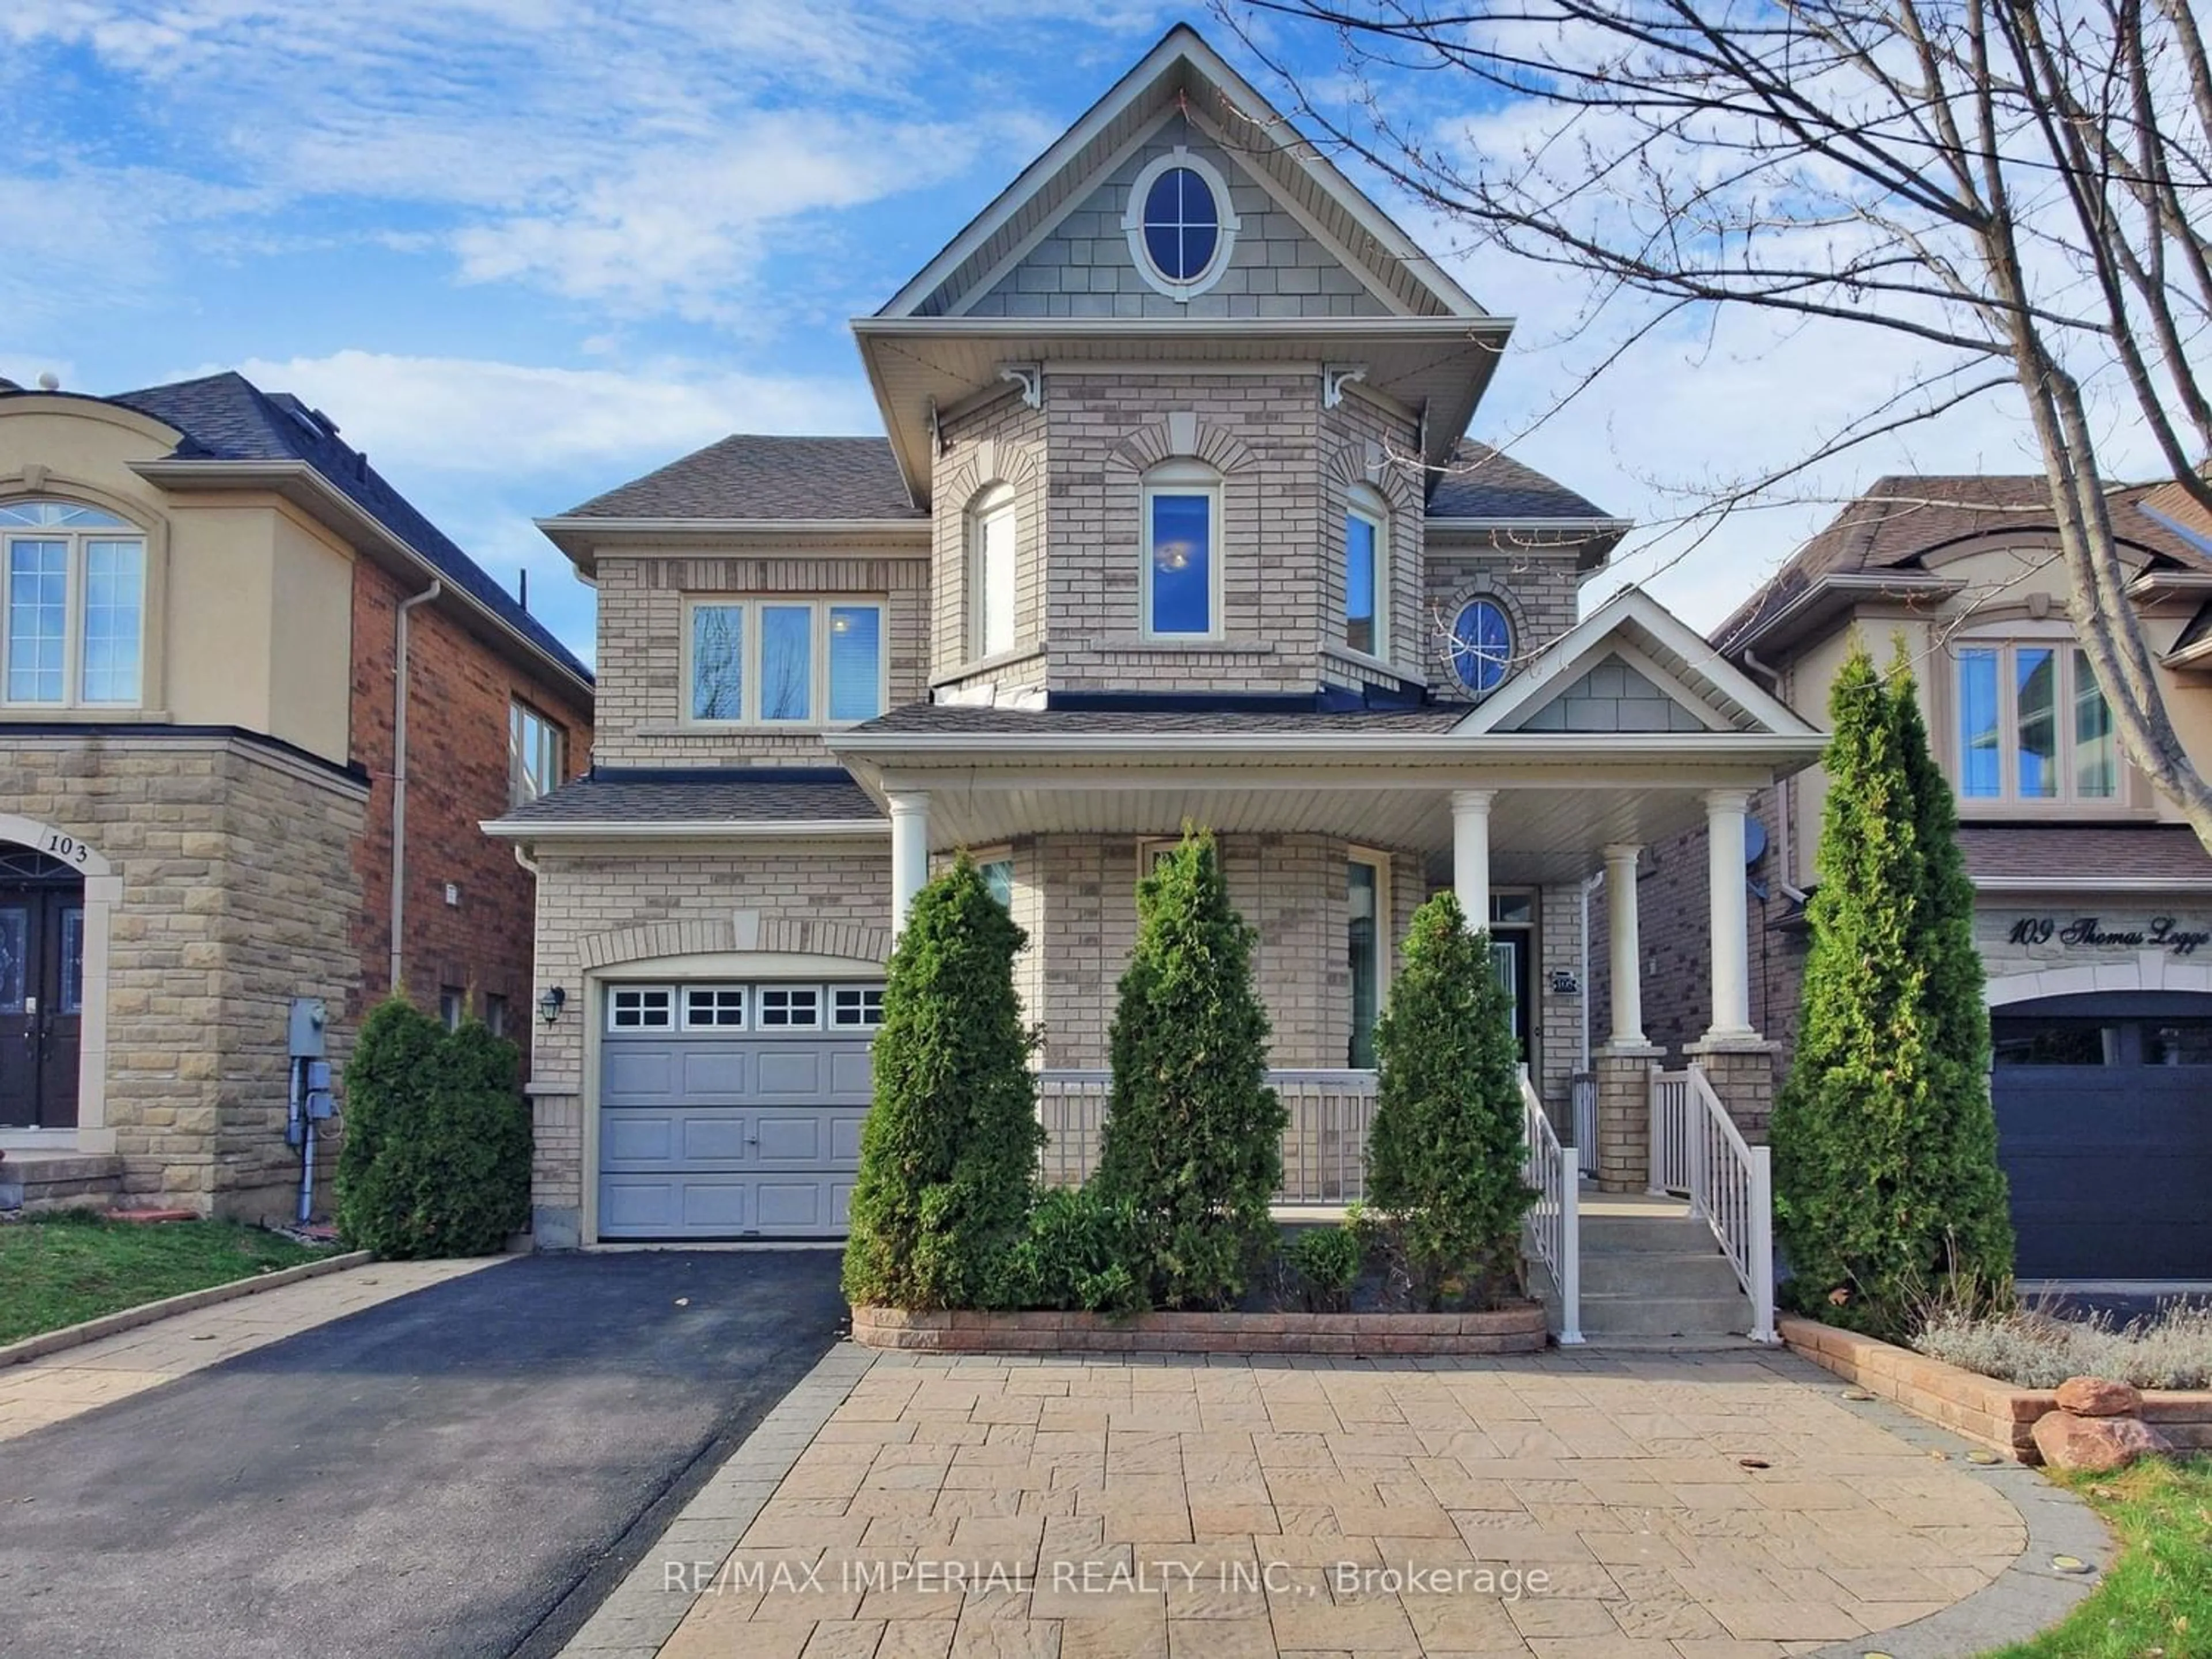 Home with brick exterior material for 105 Thomas Legge Cres, Richmond Hill Ontario L4E 4V6